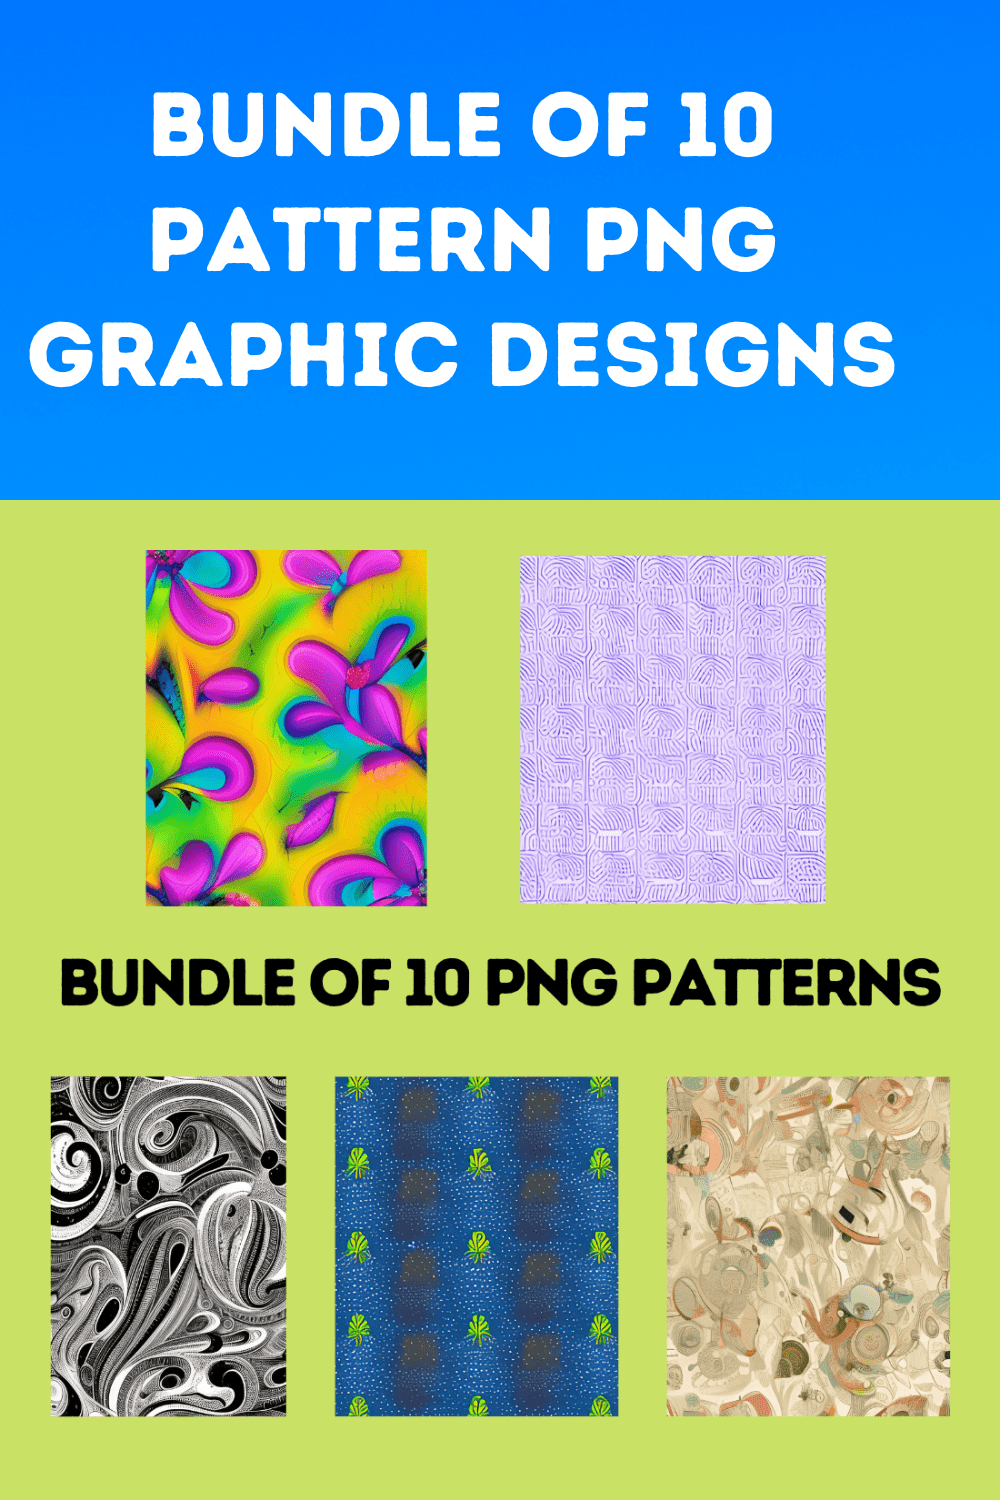 Colorful Patterns PNG Design pinterest image.